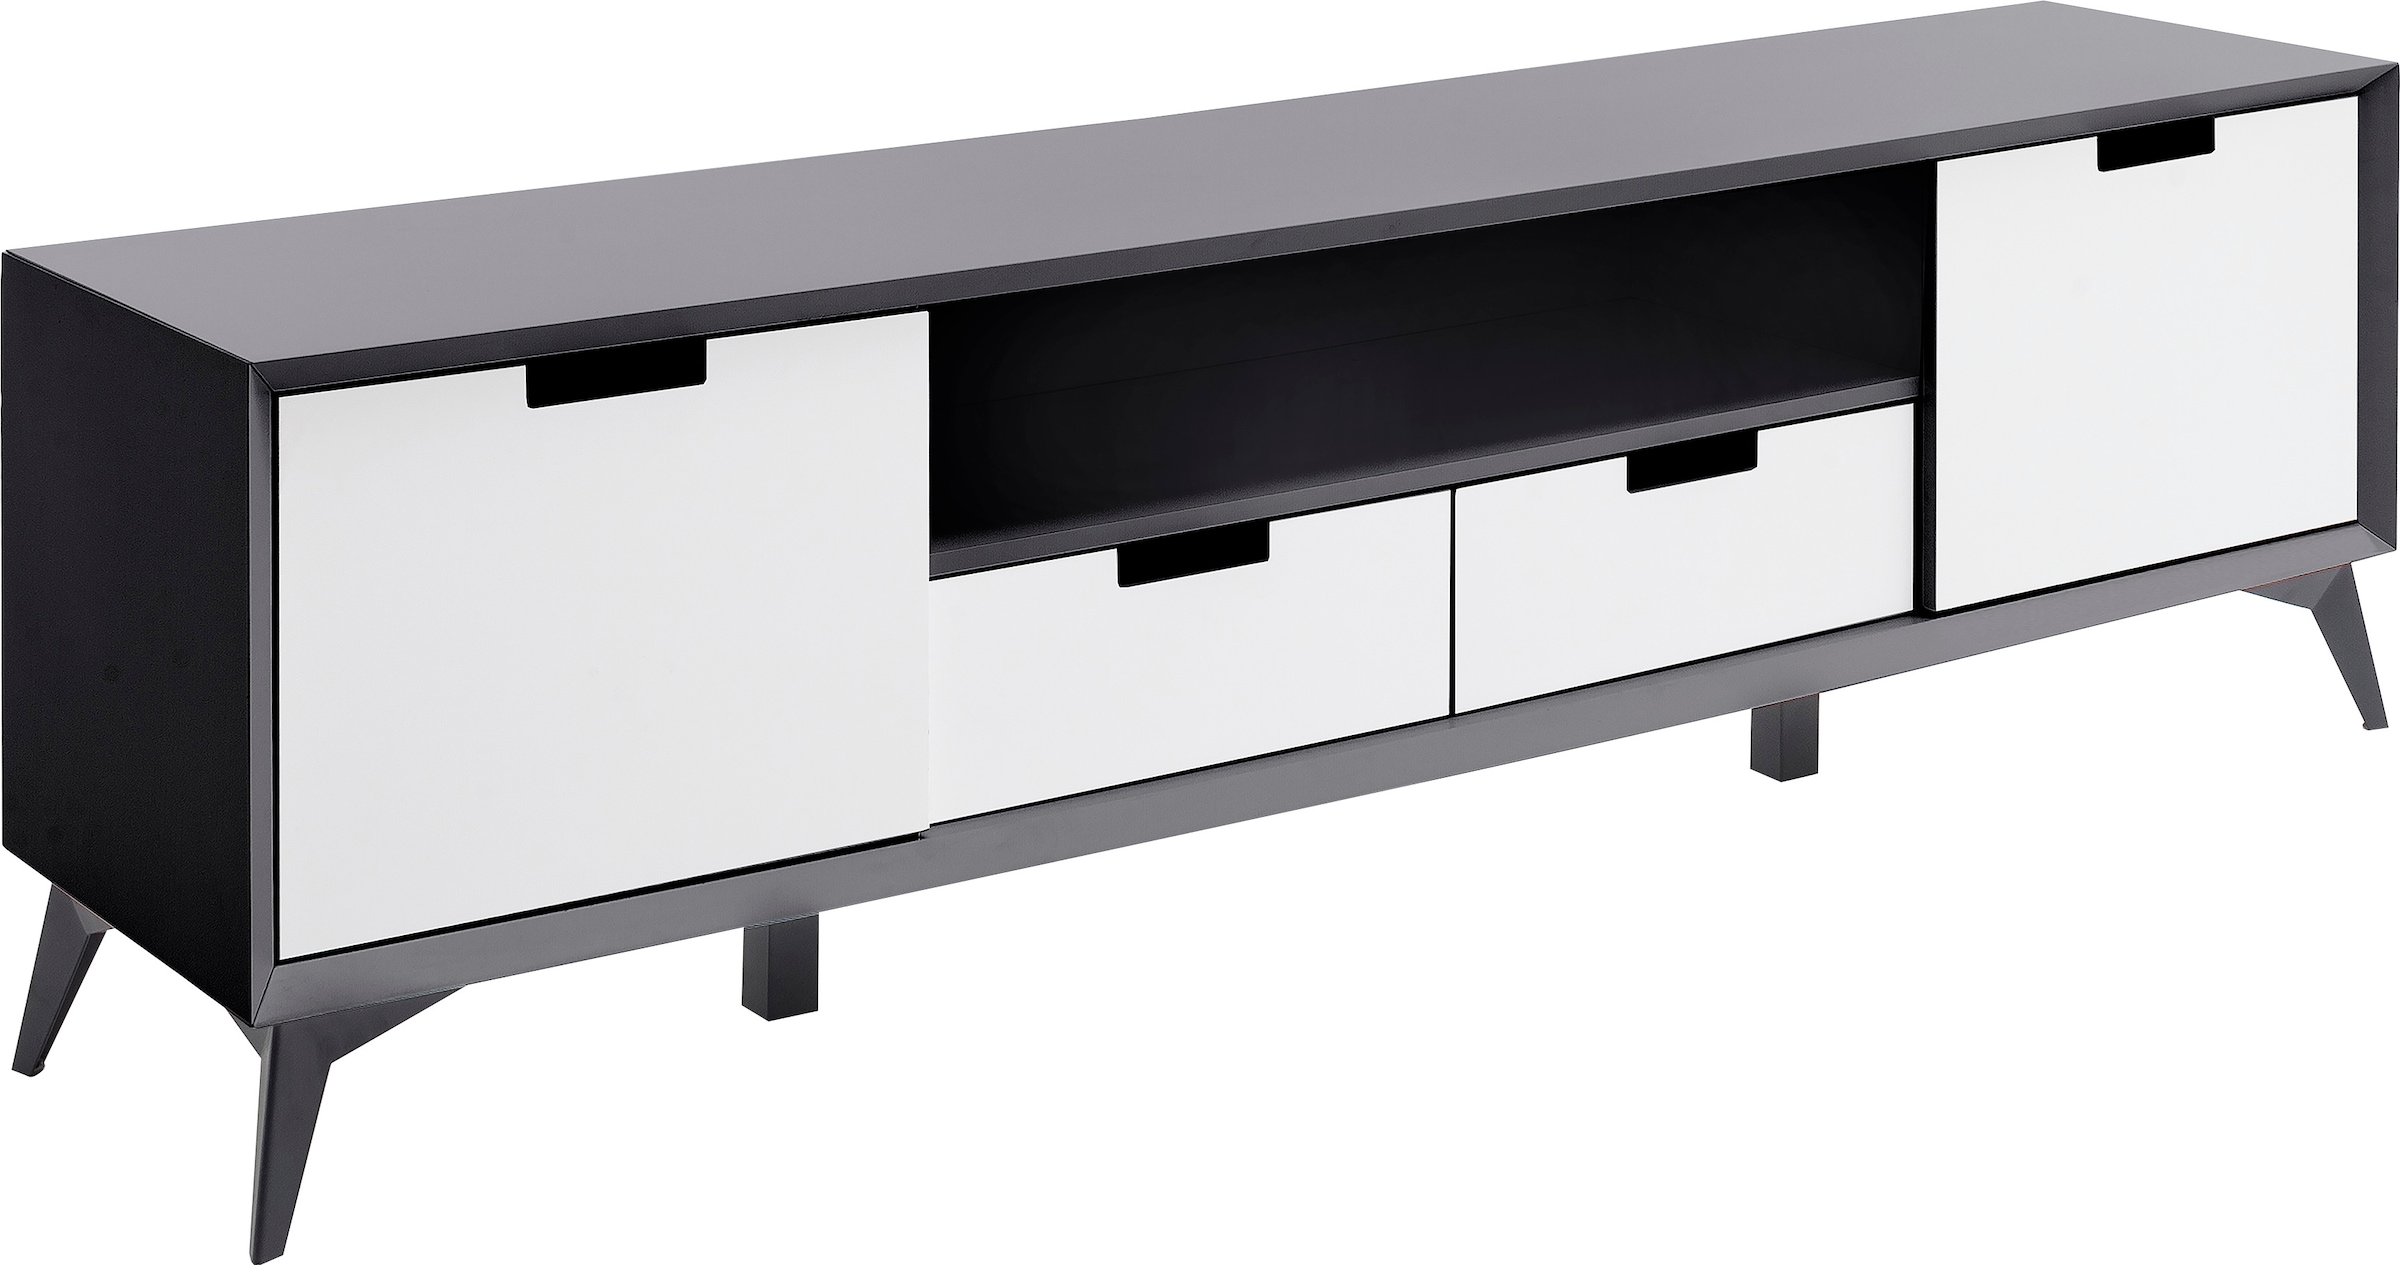 MCA furniture Lowboard "Netanja", Breite ca. 180 cm